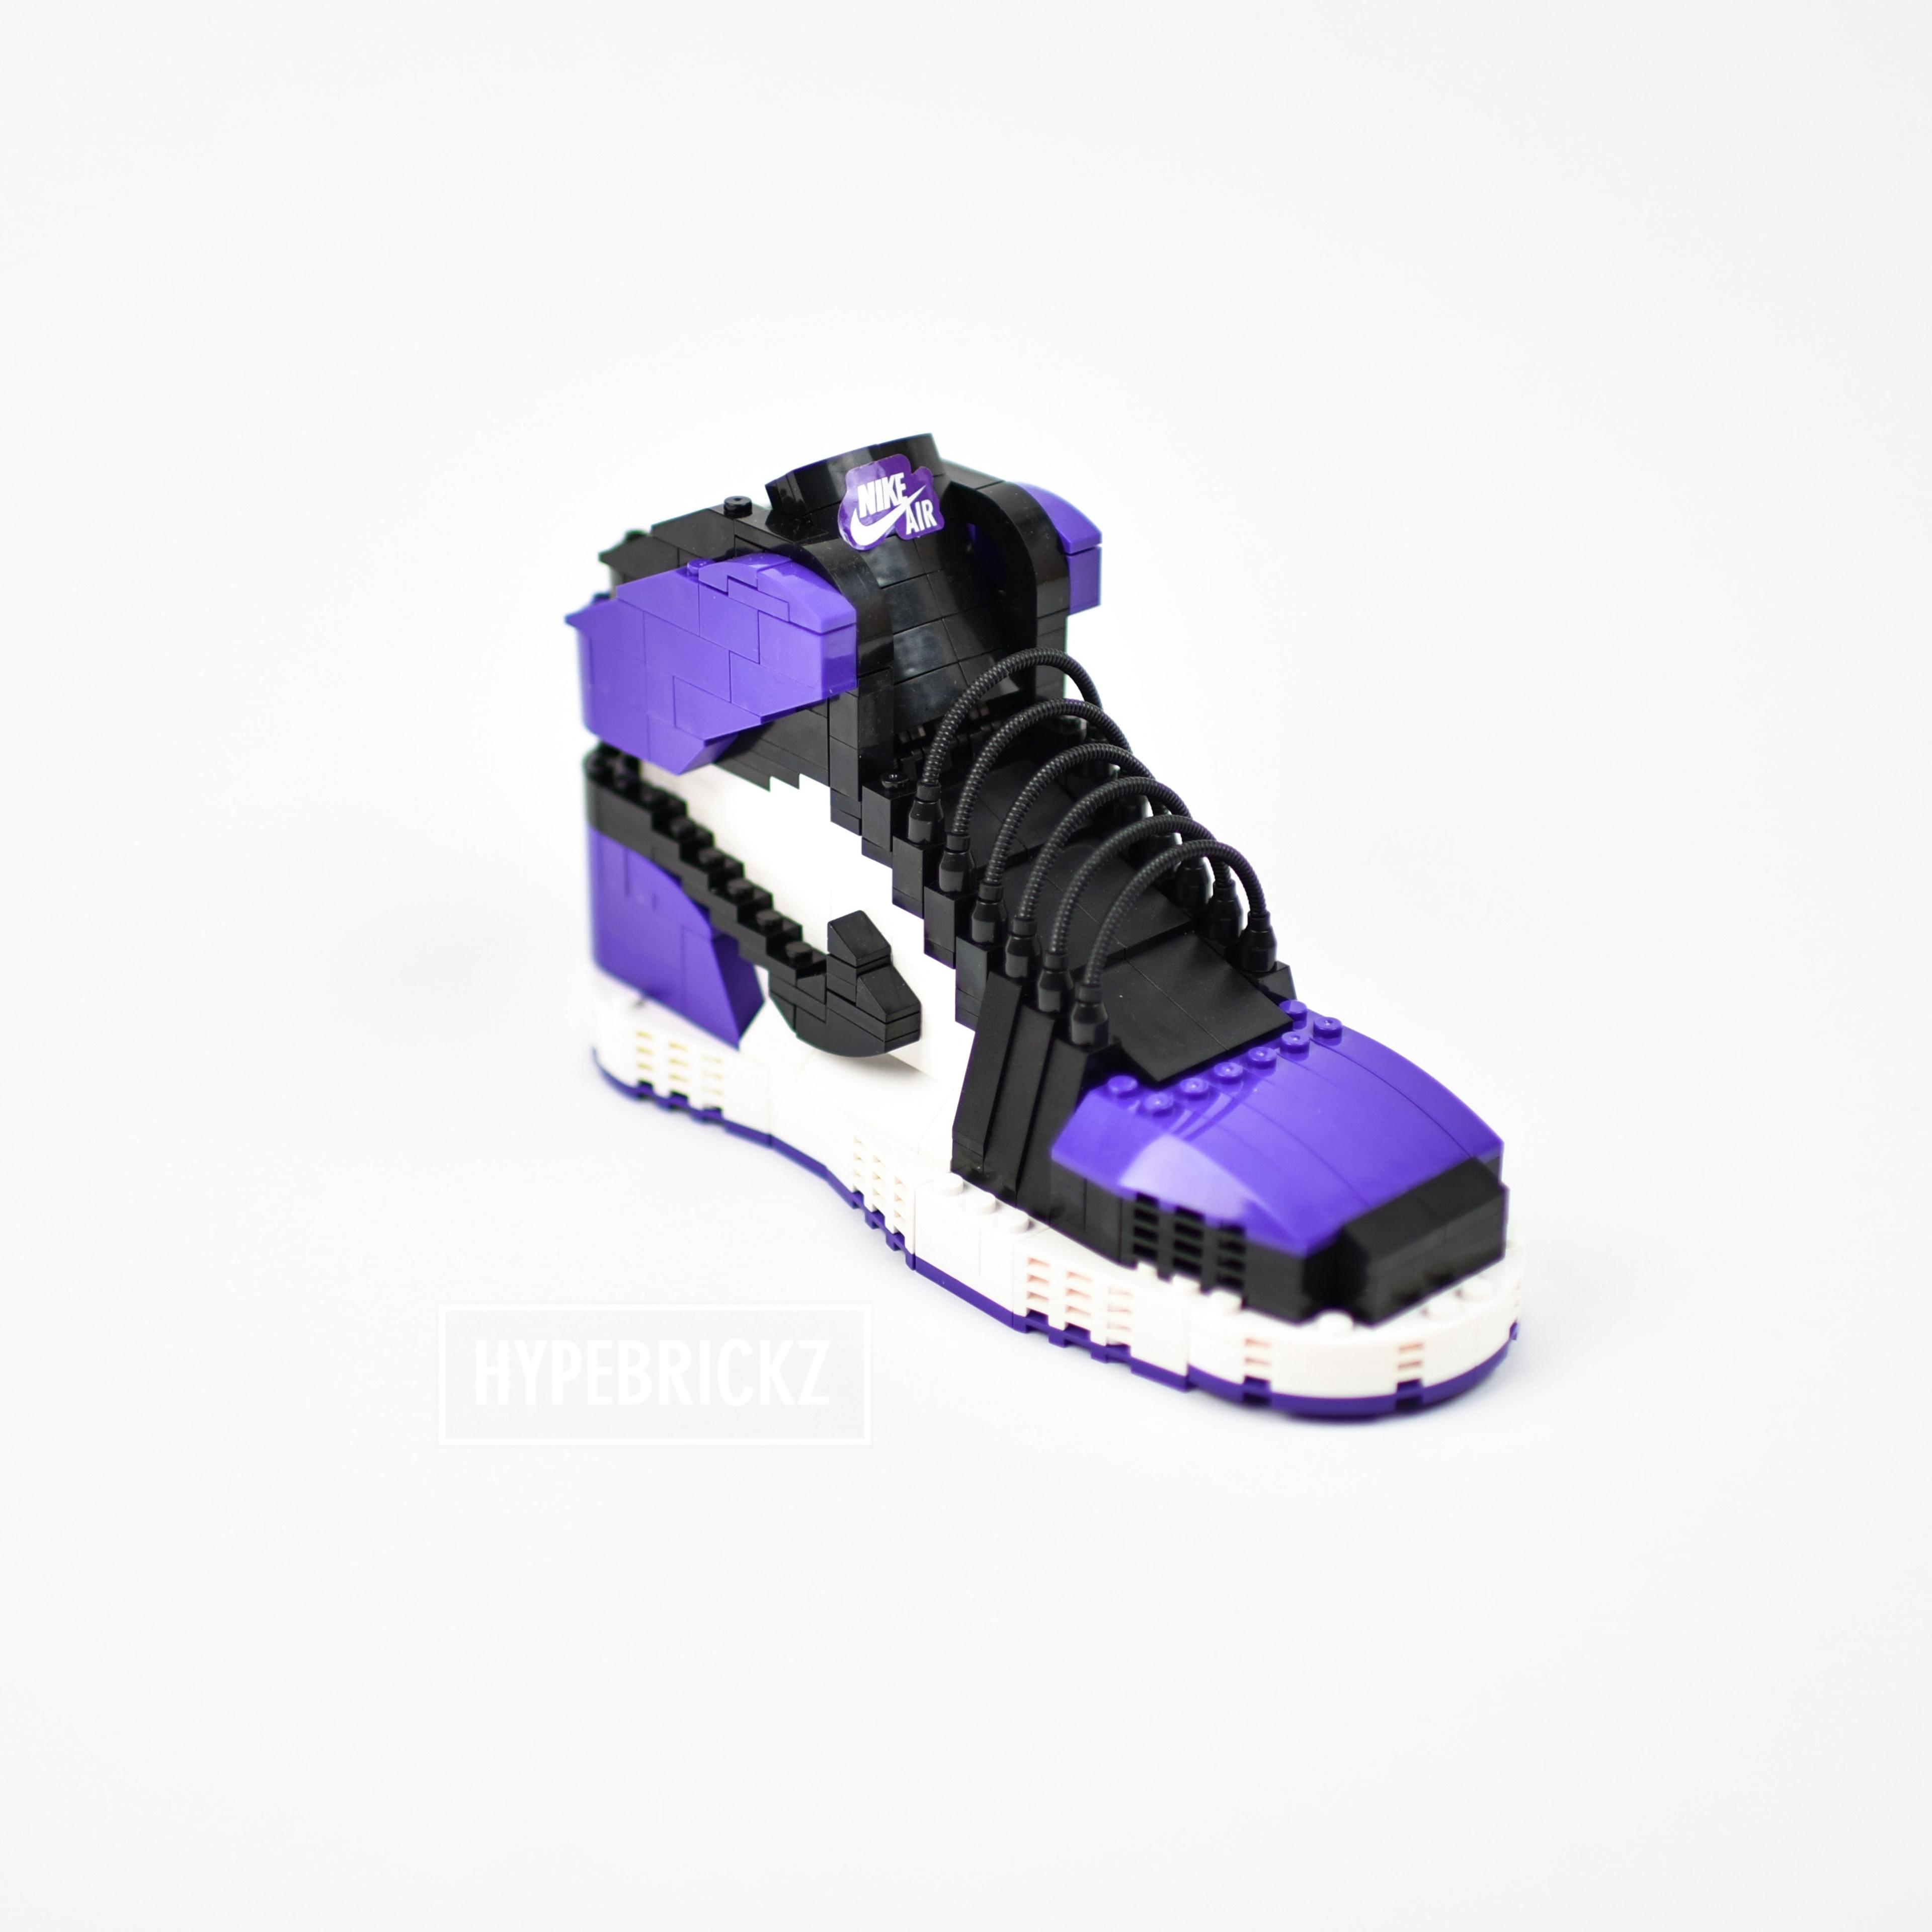 Alternate View 2 of LARGE AJ1 "Court Purple" Sneaker Bricks Sneaker 3D Puzzle Buildi